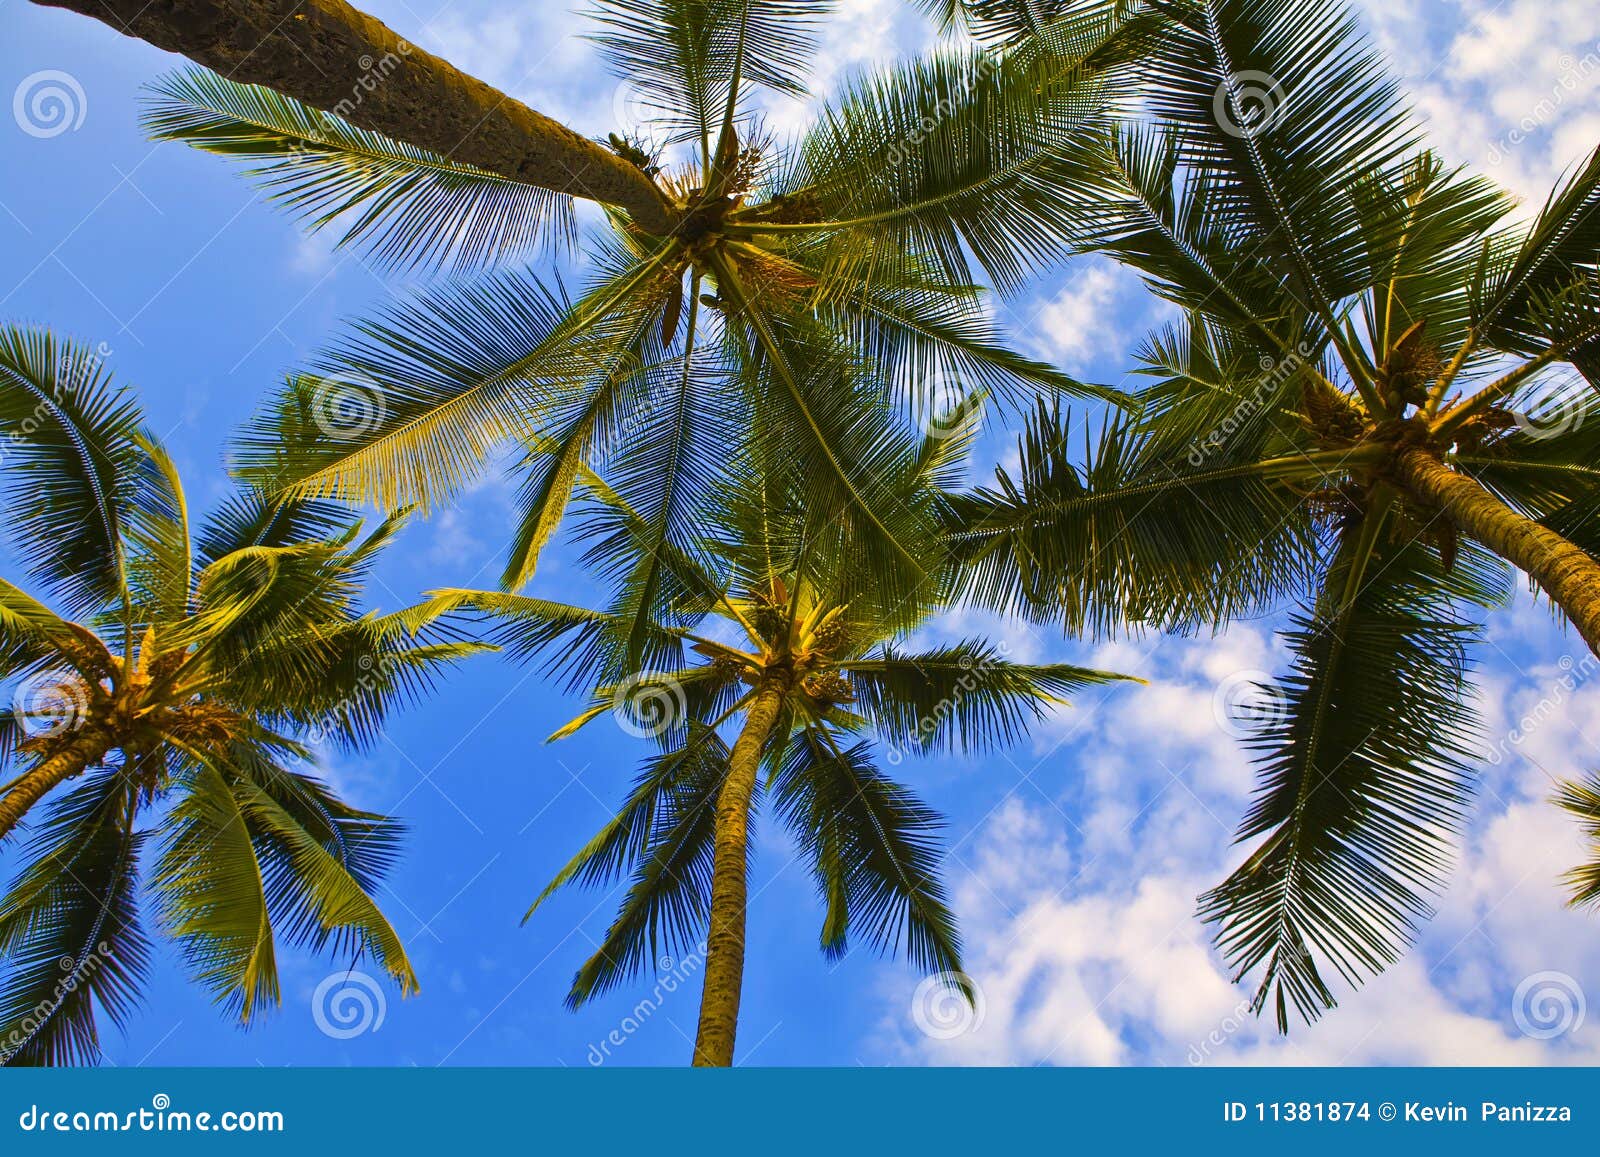 16,727 Hawaii Palm Trees Photos - Free & Royalty-Free Stock Photos 